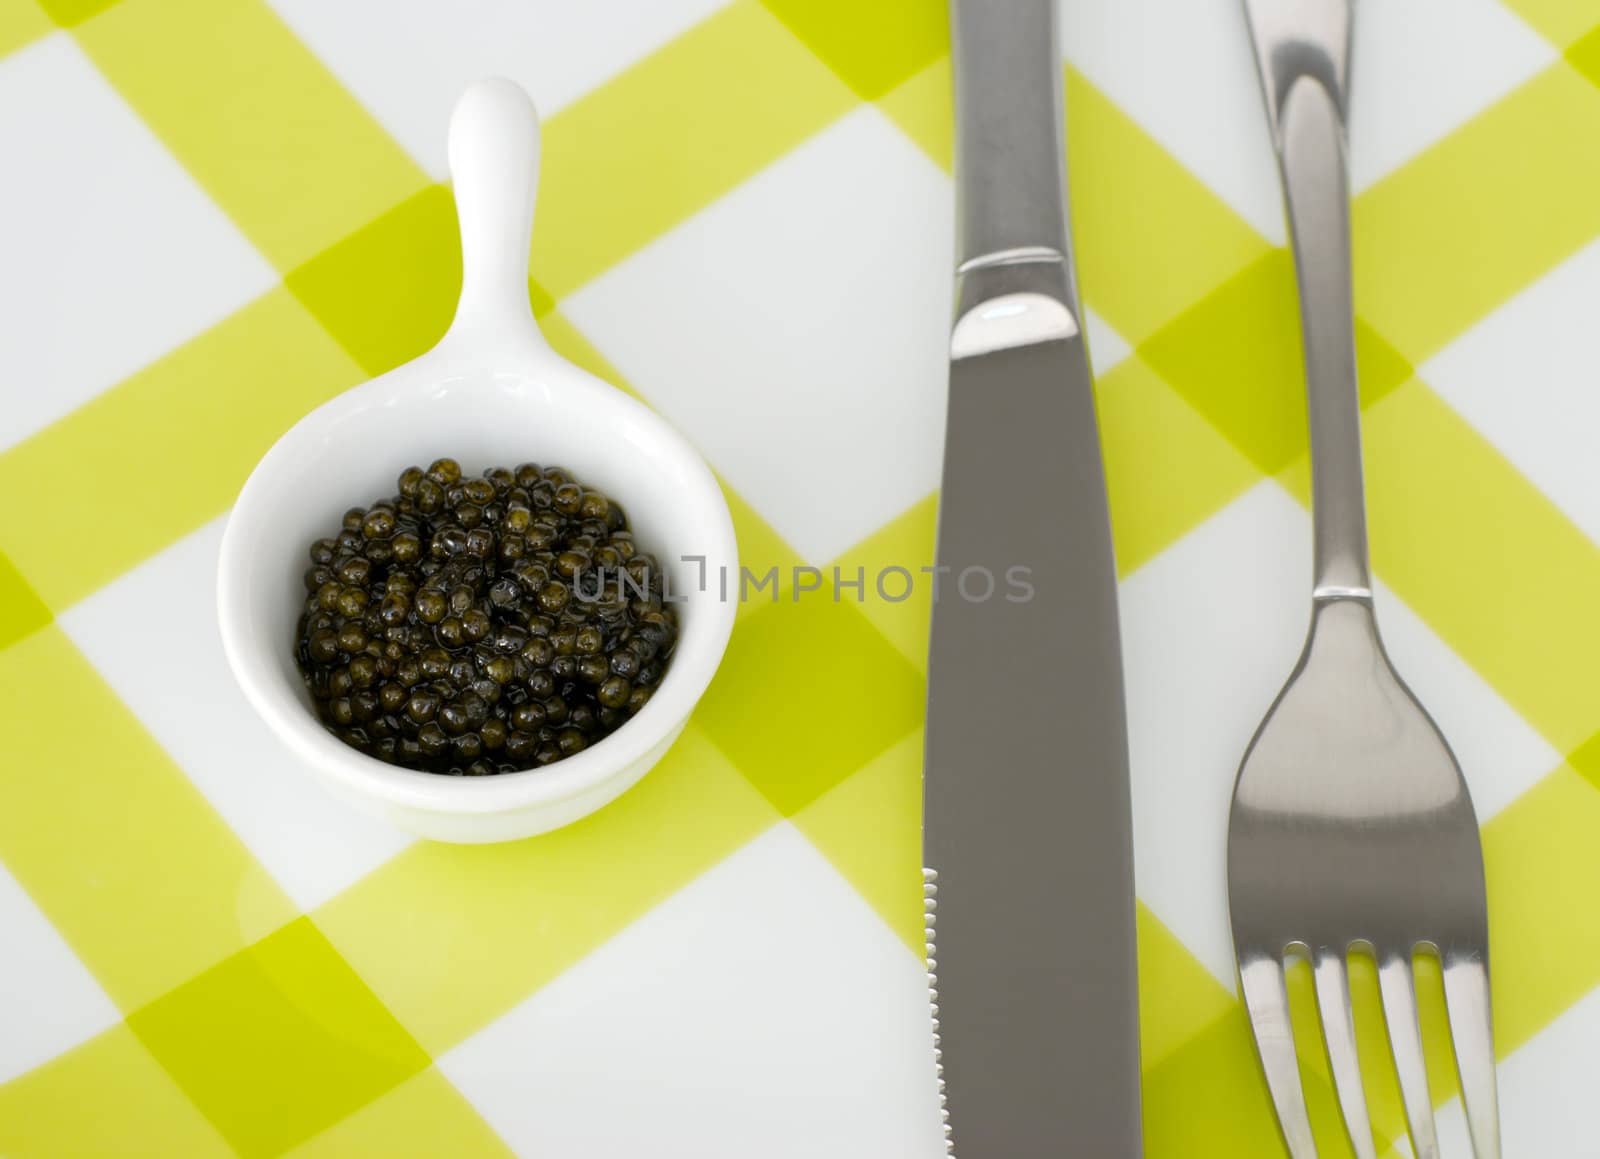 Bon appetit - caviar, fork and knife